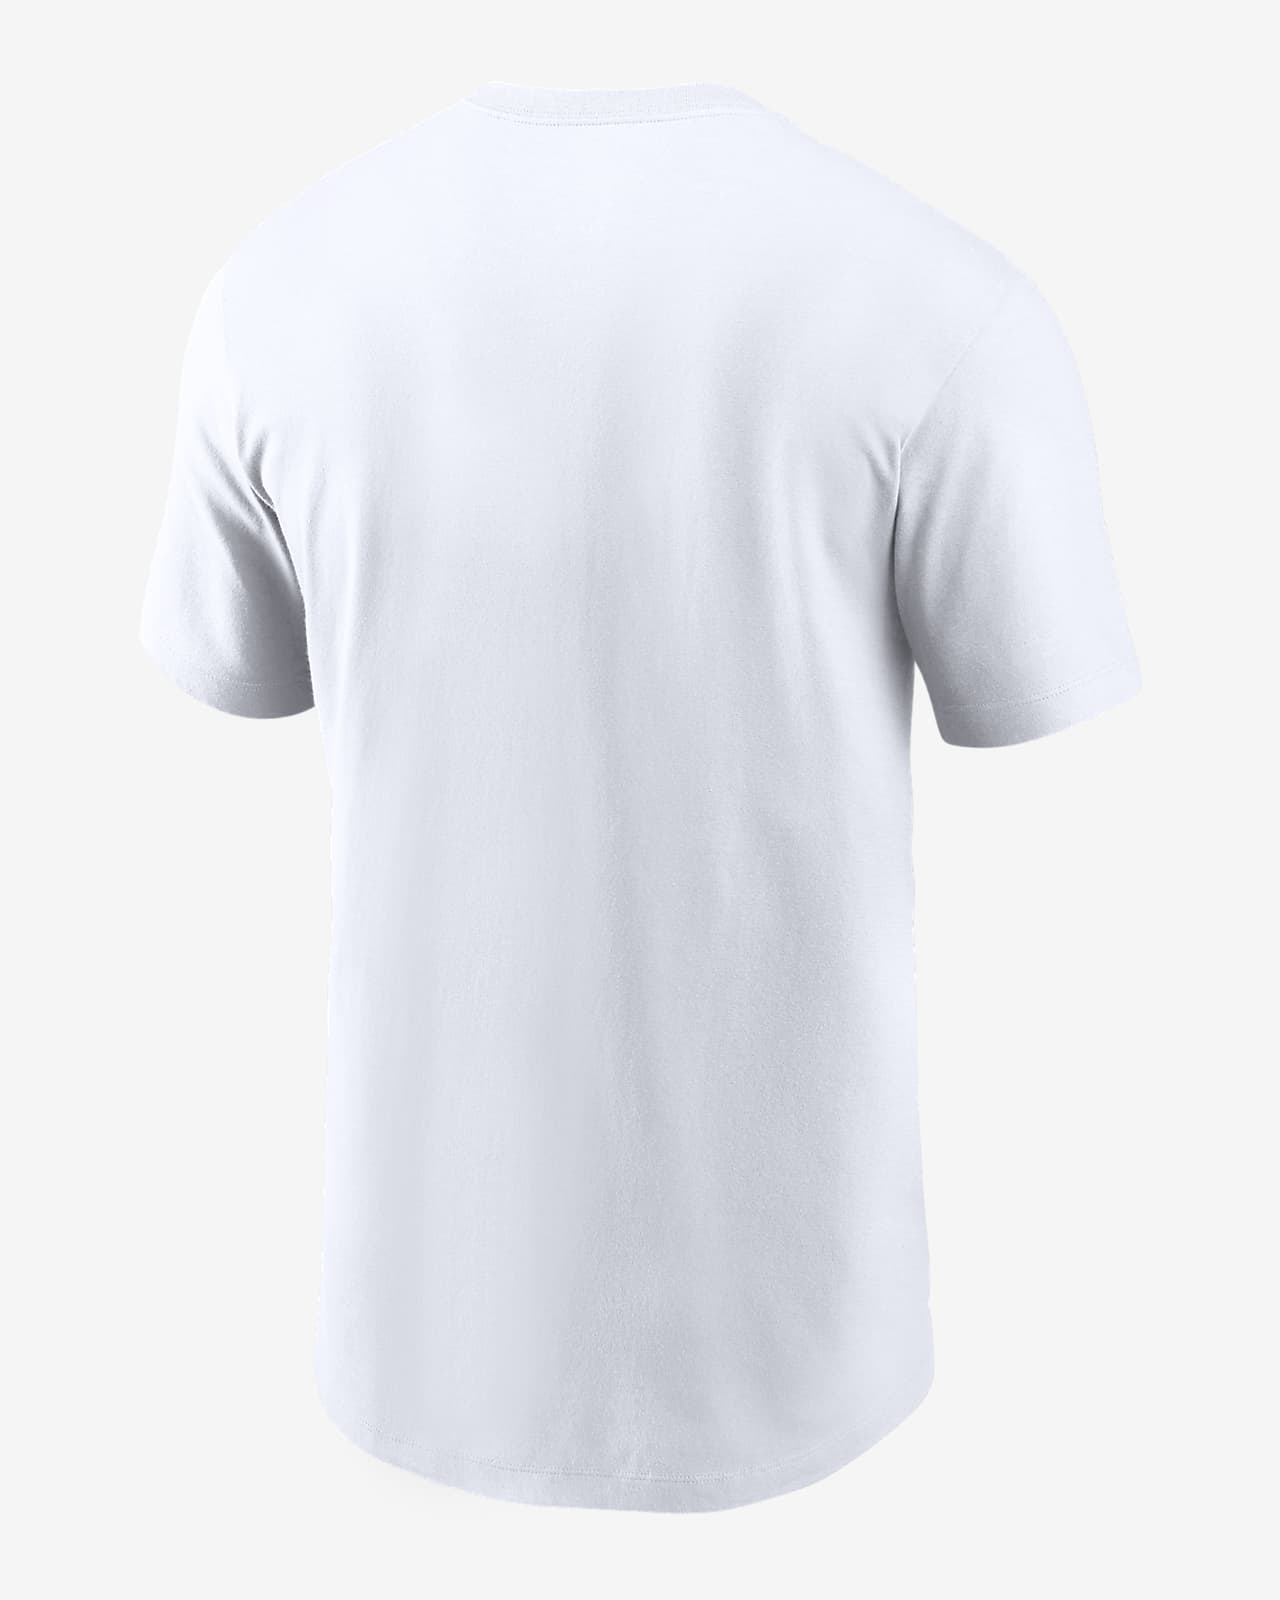 Nike Dri-Fit City Connect Logo (MLB Texas Rangers) Men's T-Shirt